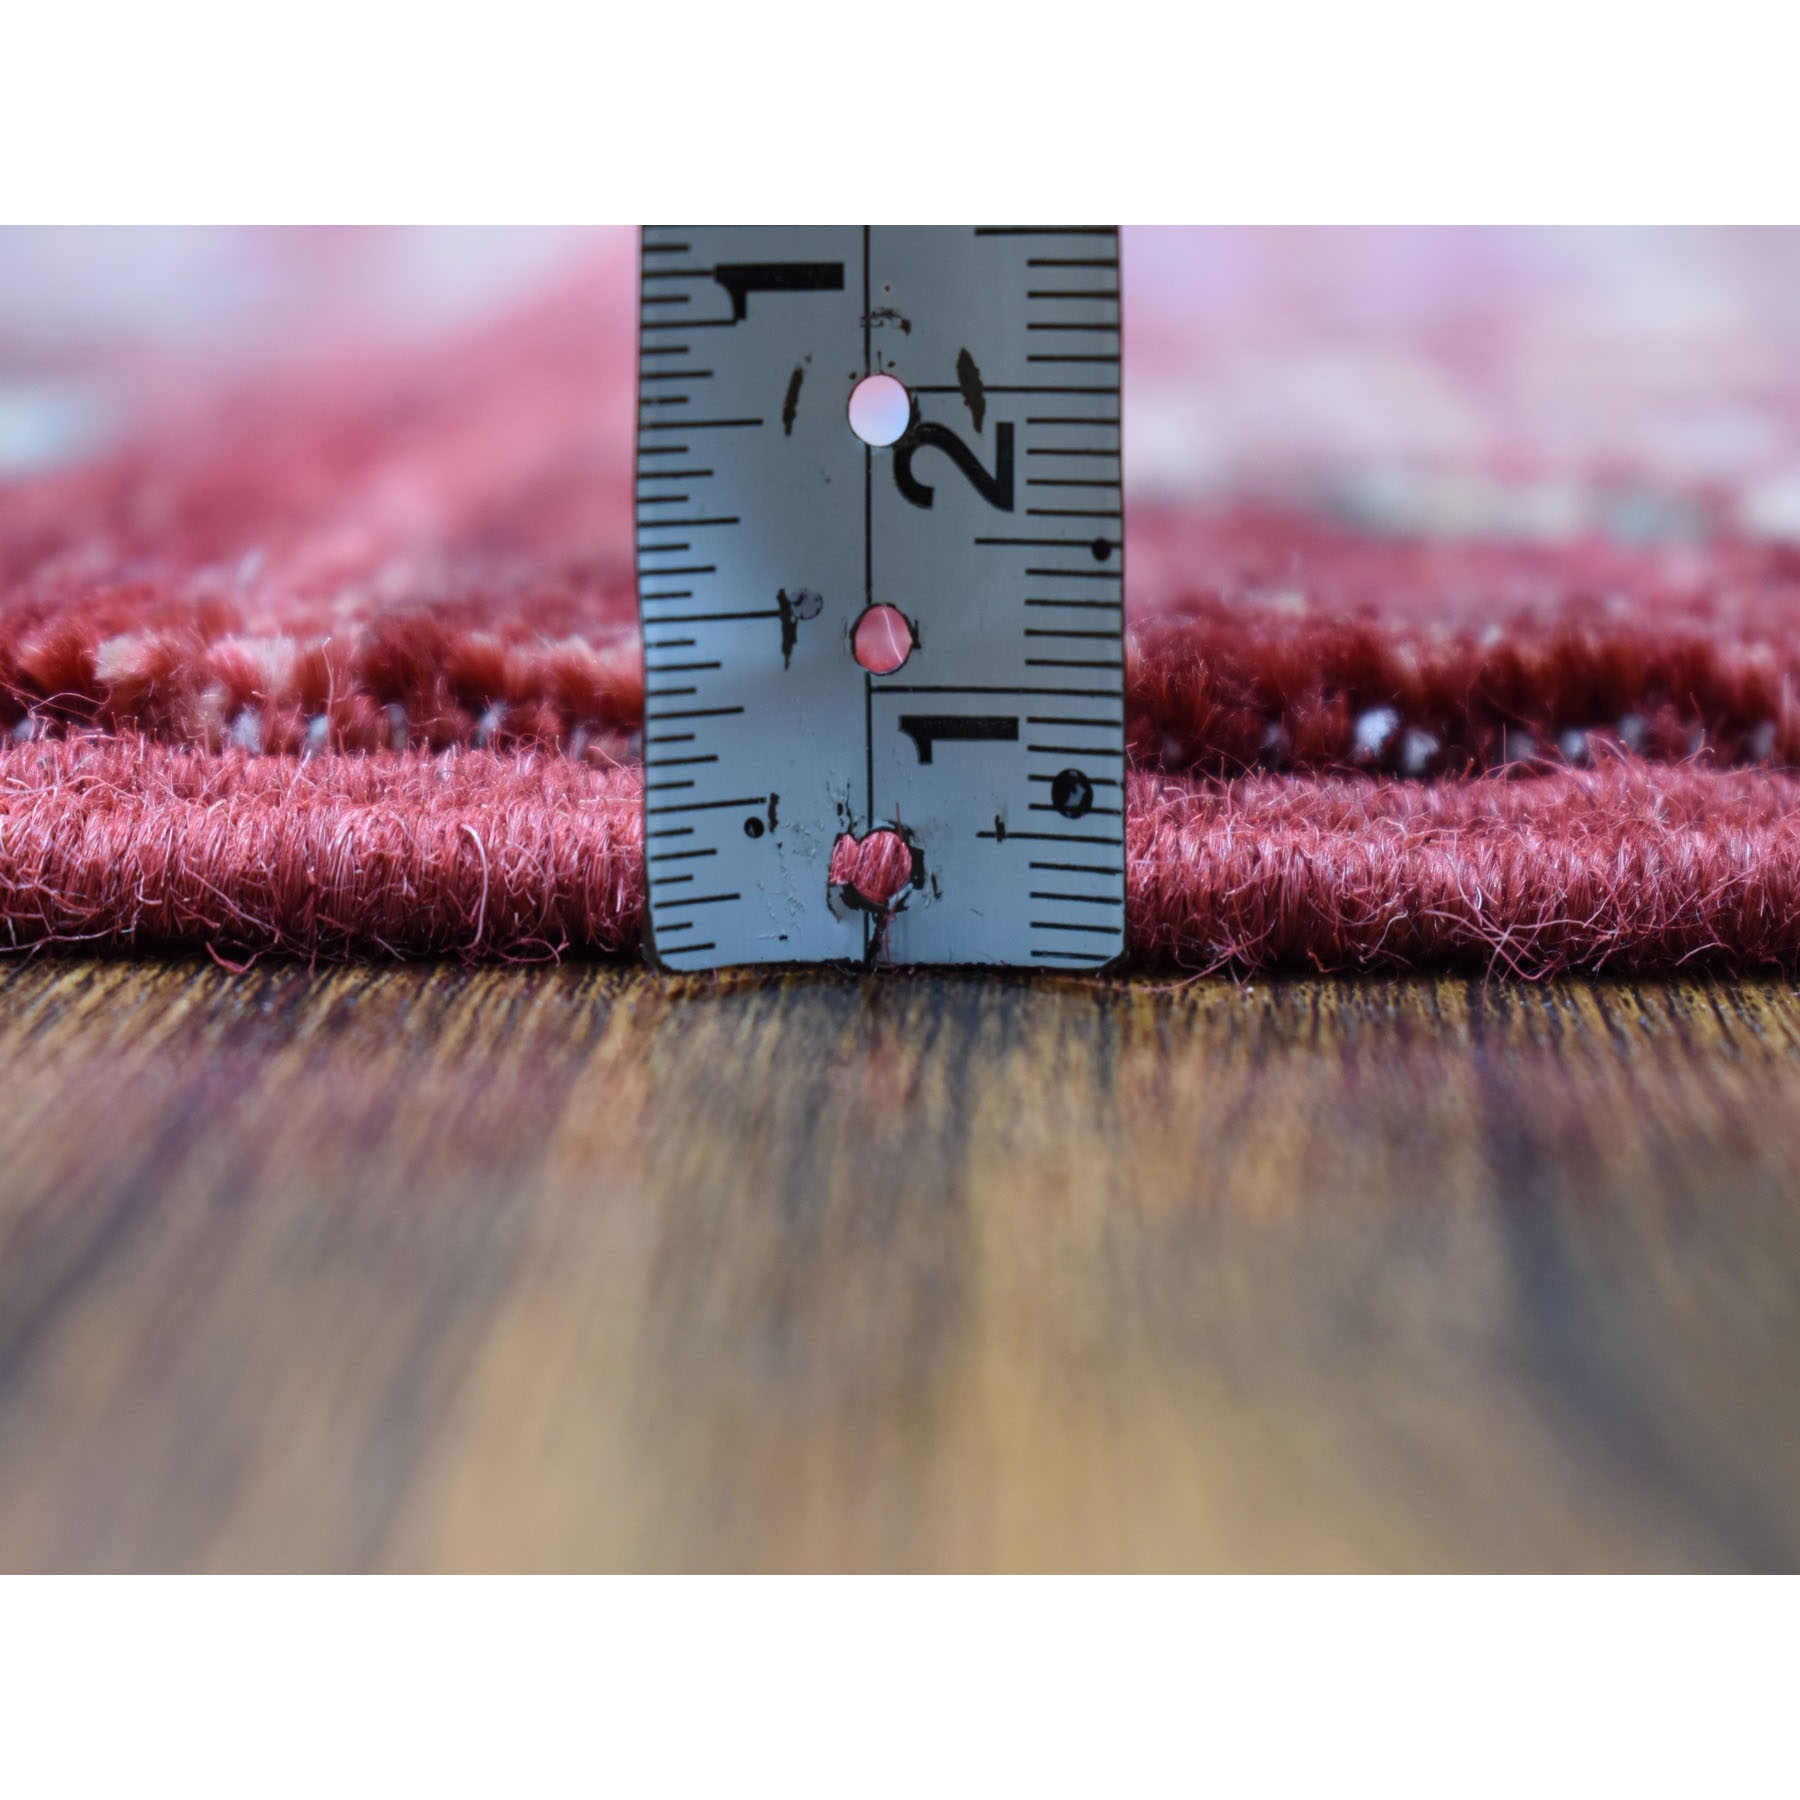 3-3 x5-1  Red Kashkuli Design Super Kazak Pictorial Hand Knotted 100% Wool Oriental Rug 